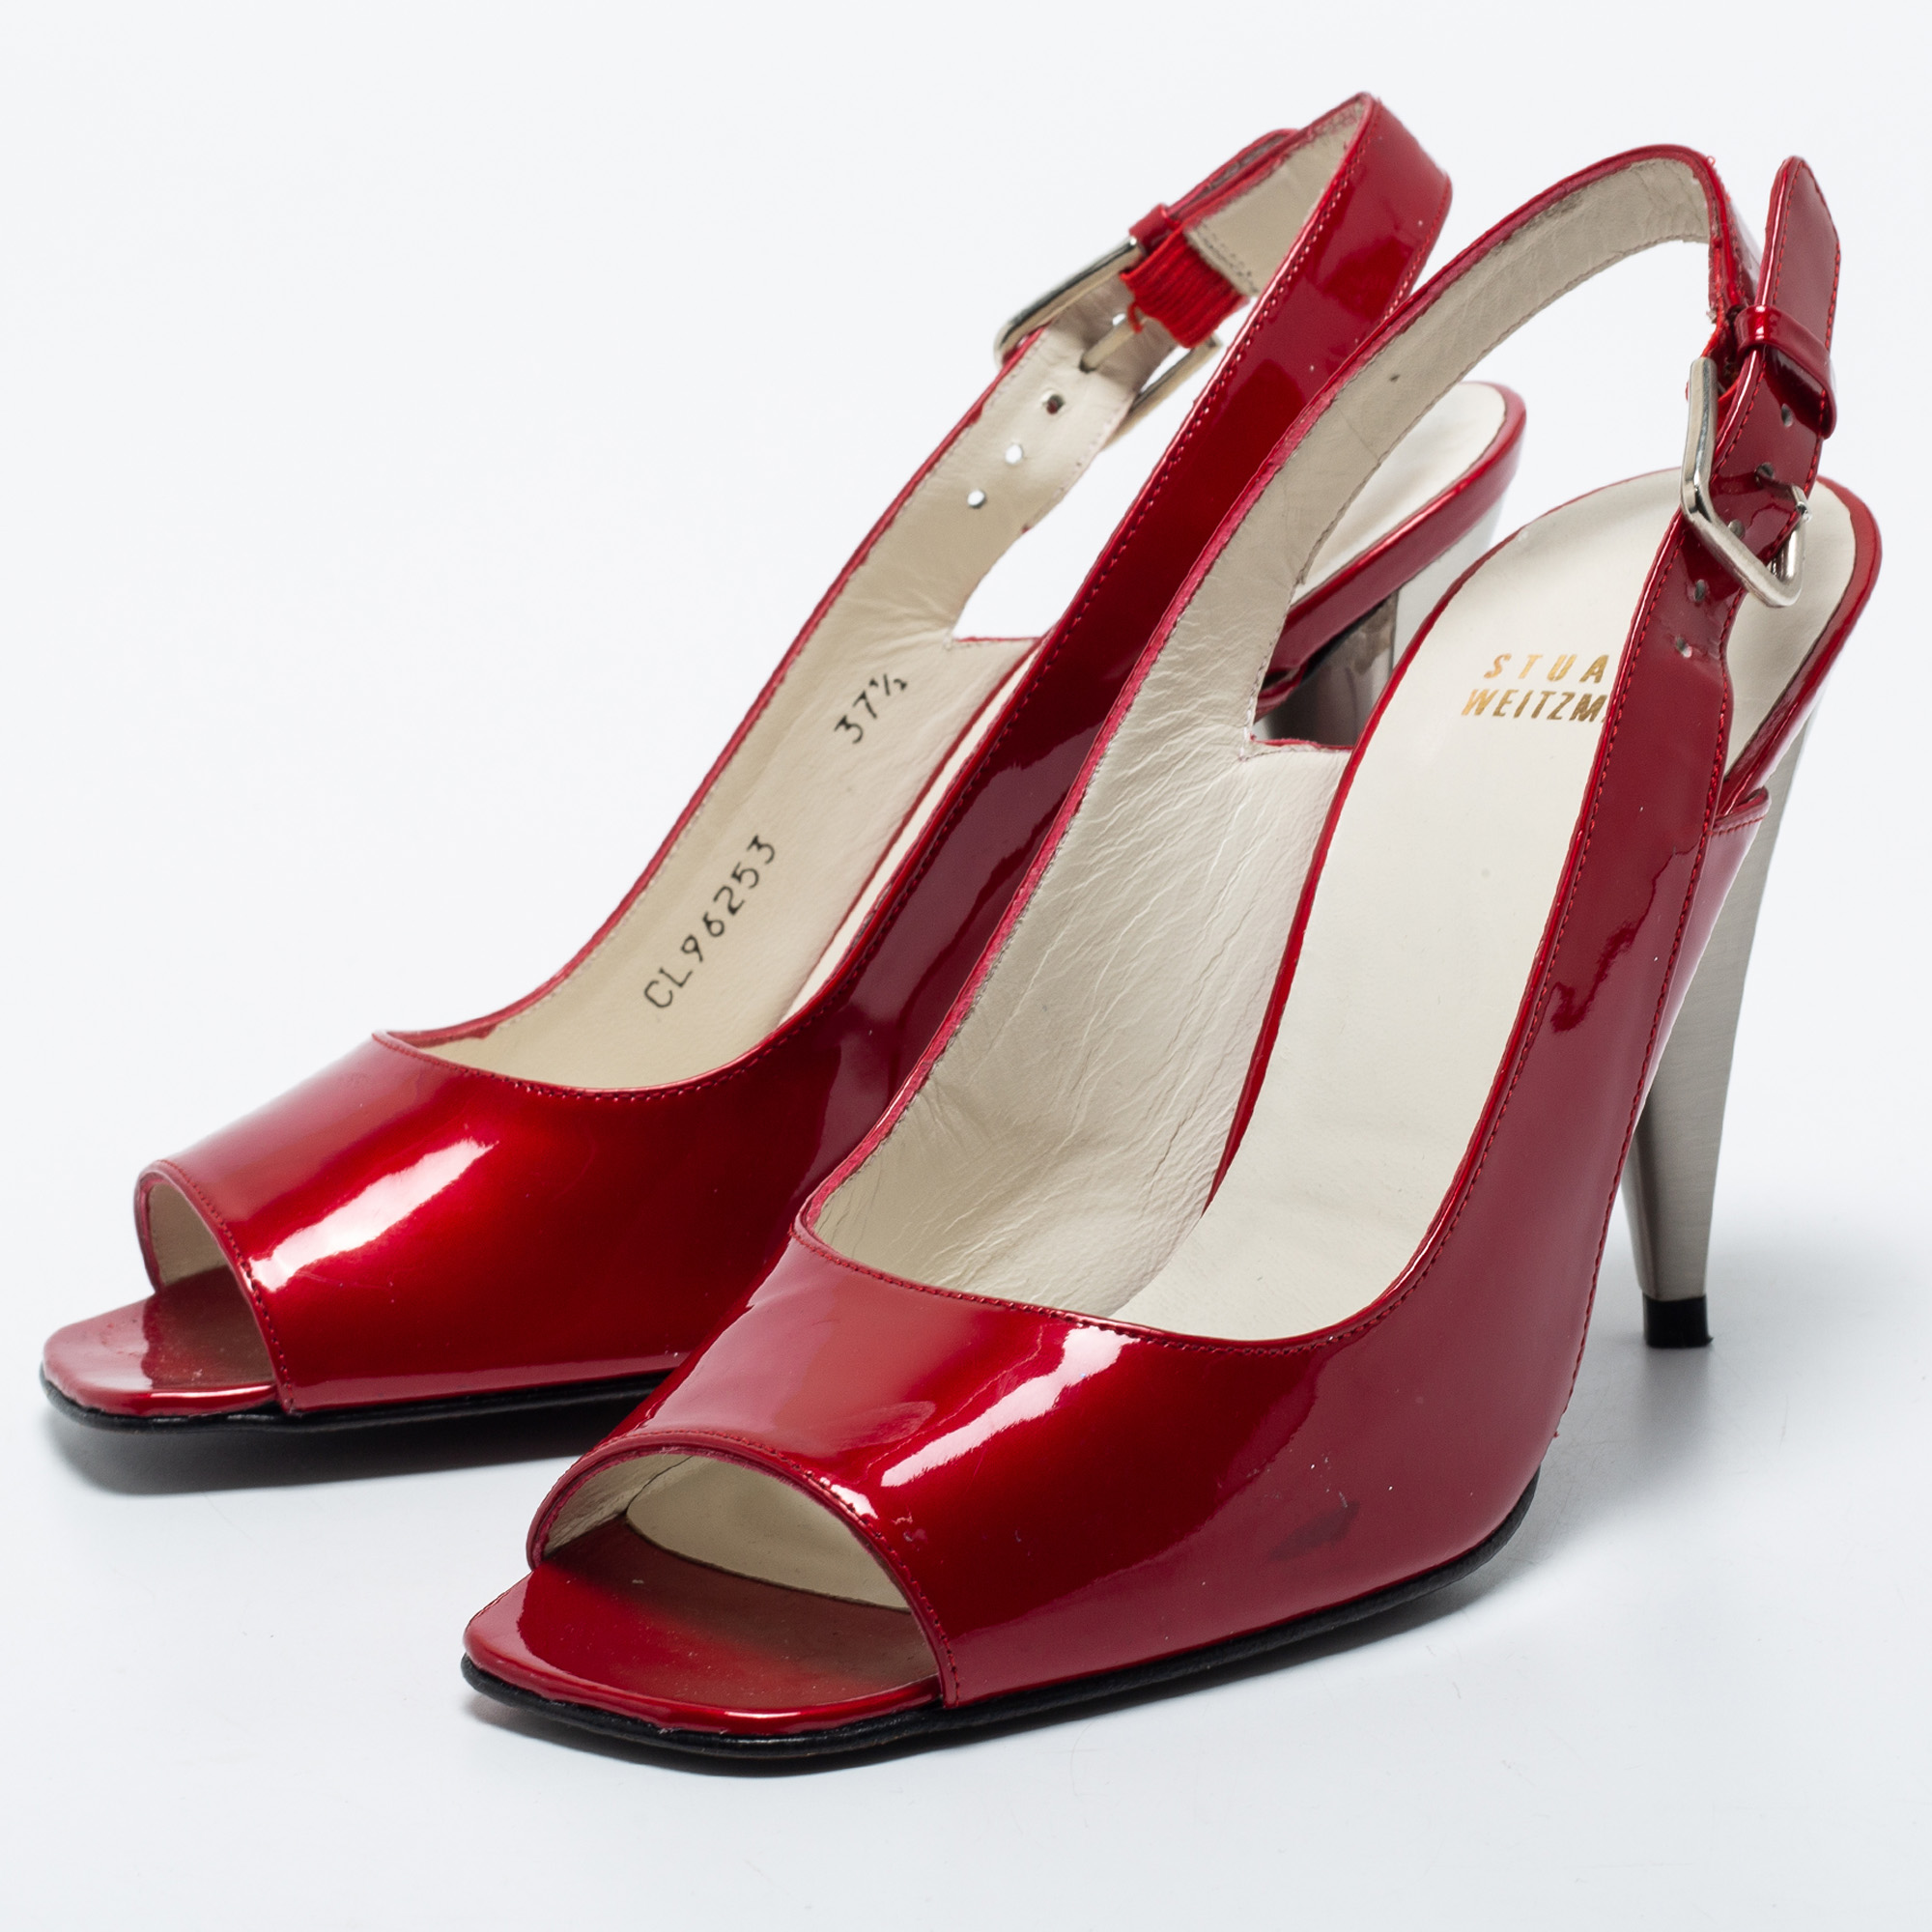 

Stuart Weitzman Red Patent Leather Peep Toe Slingback Pumps Size